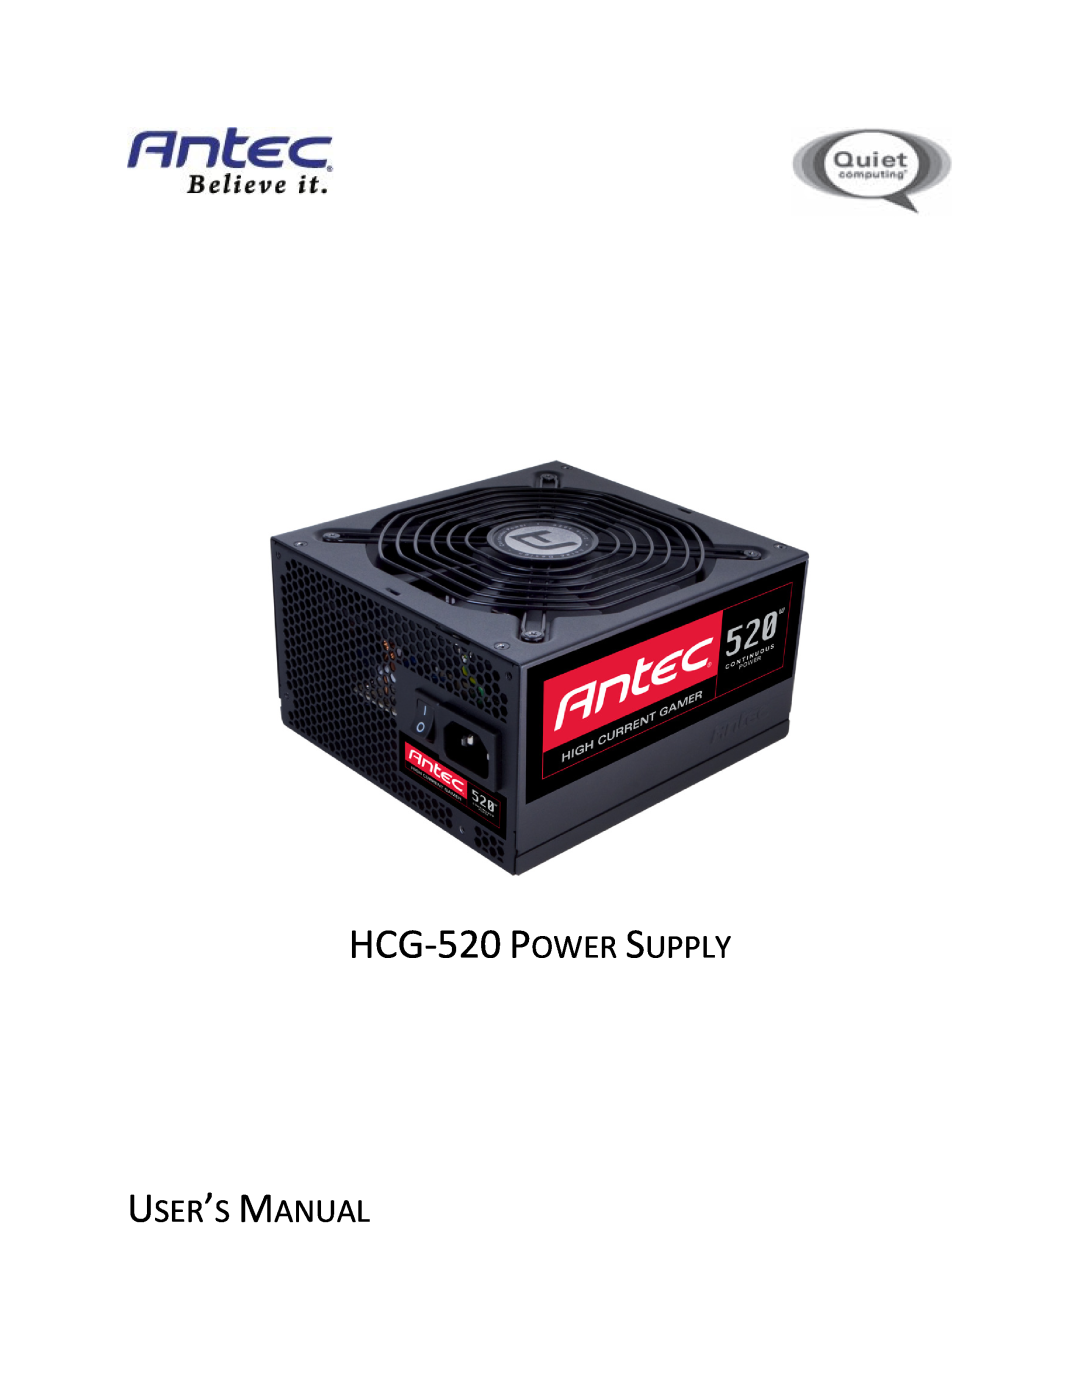 Antec user manual HCG-520 POWER SUPPLY, User’S Manual 